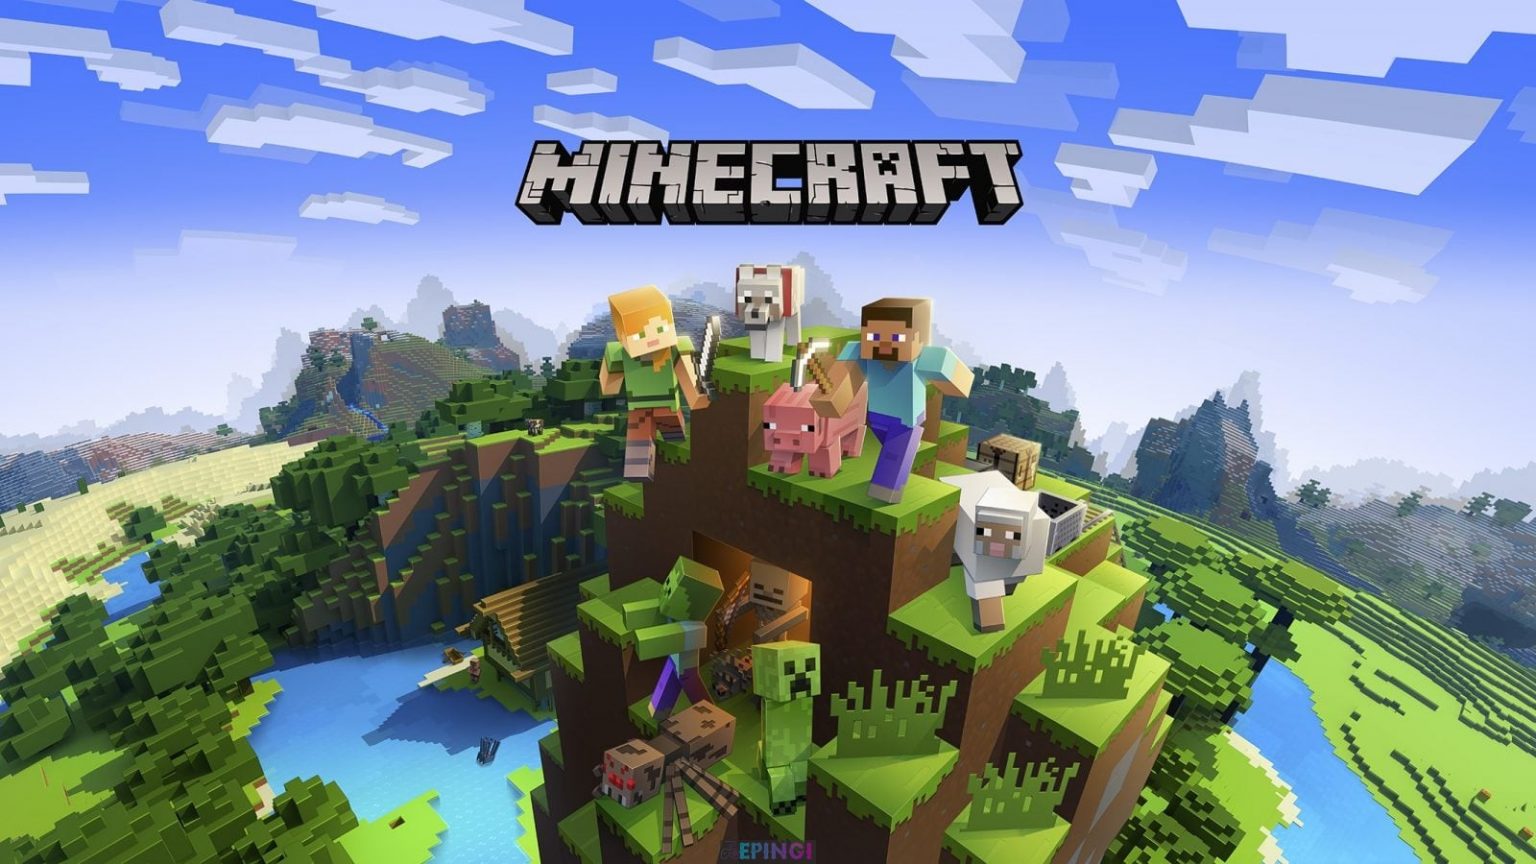 Minecraft iOS/APK Version Full Game Free Download